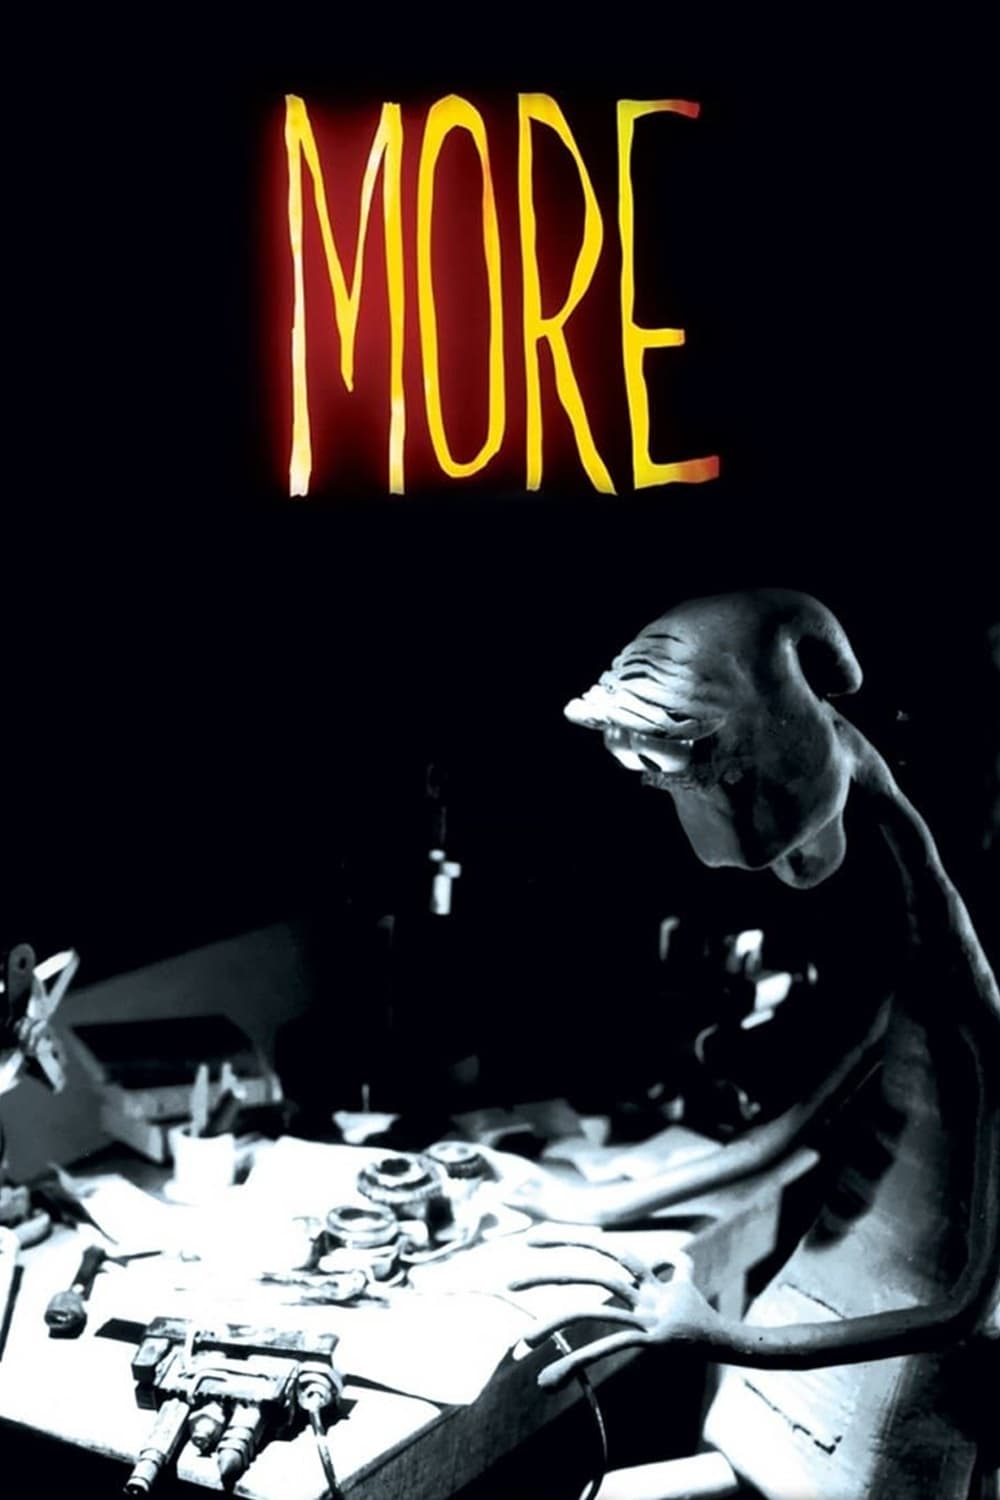 More (1998)